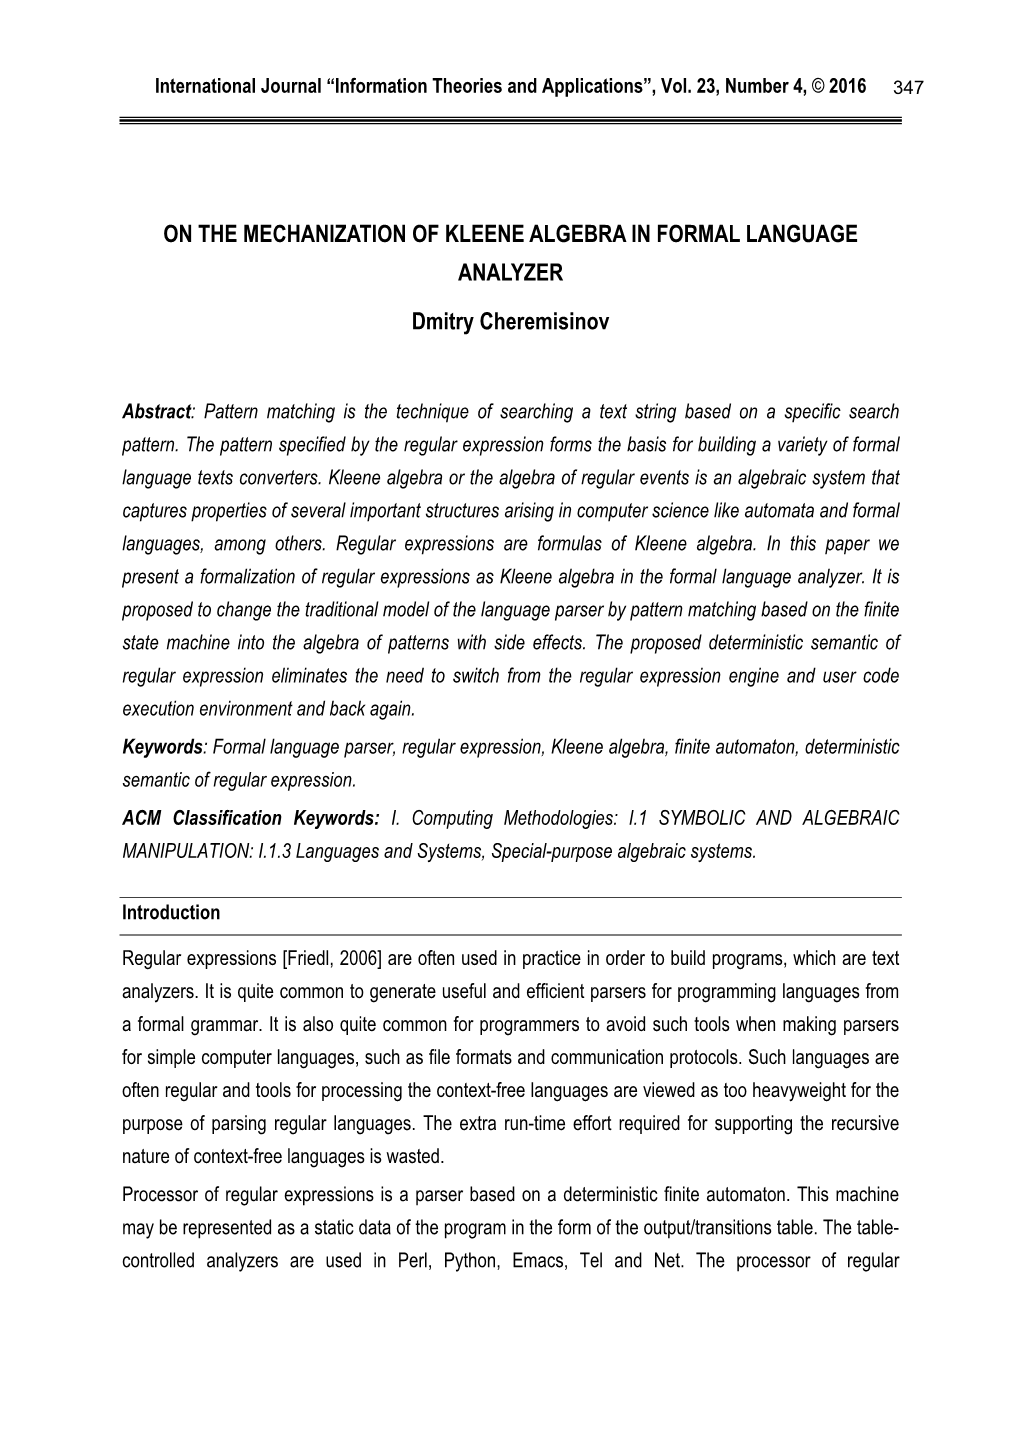 On the Mechanization of Kleene Algebra in Formal Language Analyzer